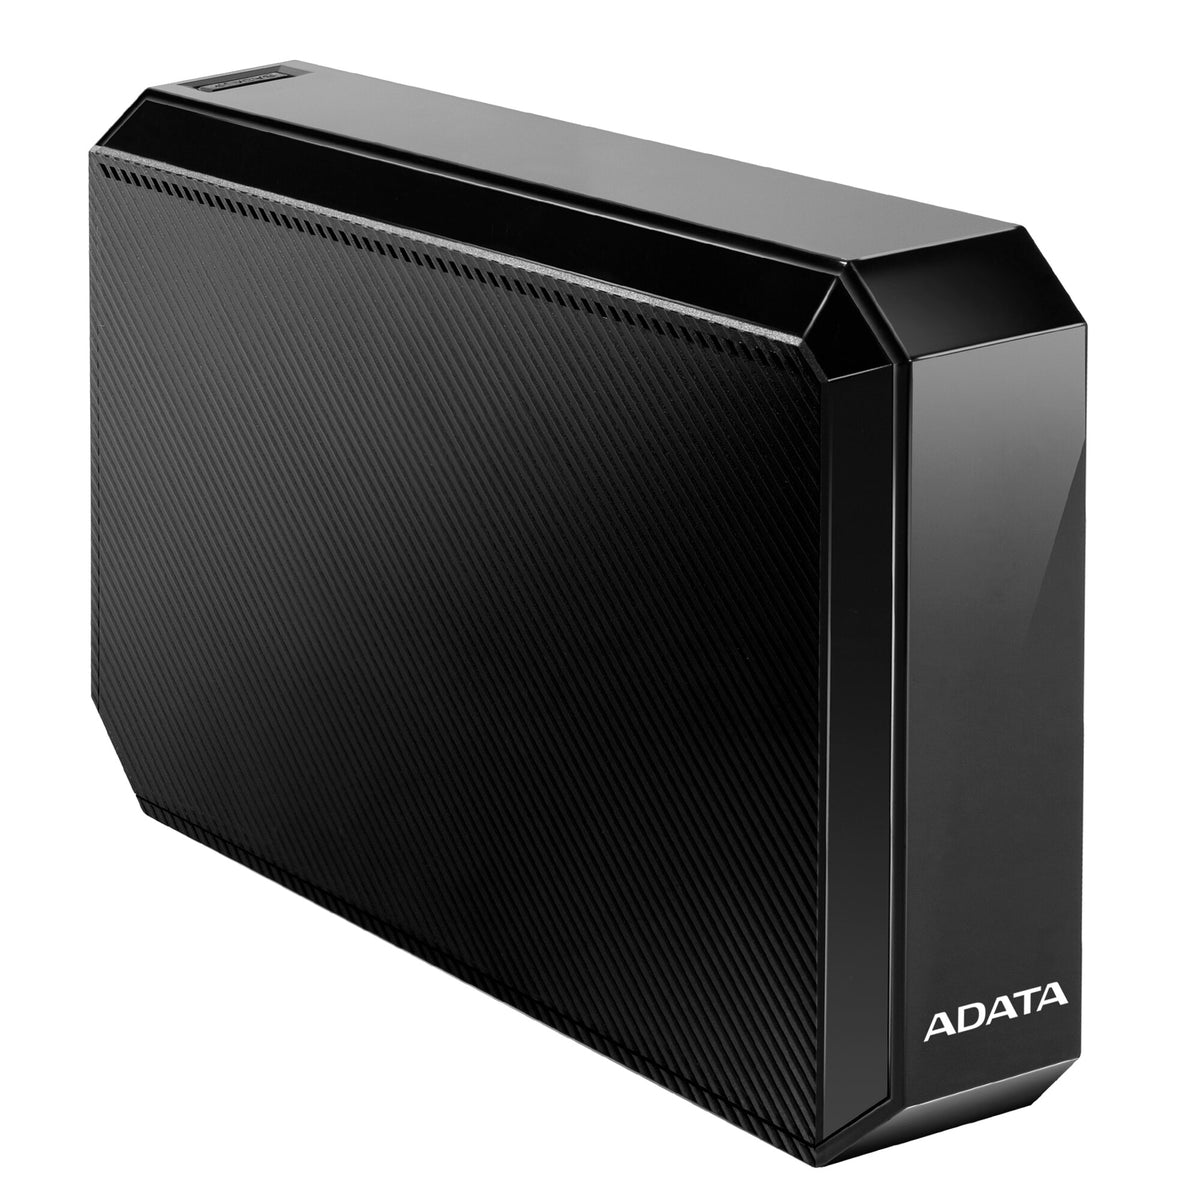 ADATA HM800 - External HDD in Black - 4 TB